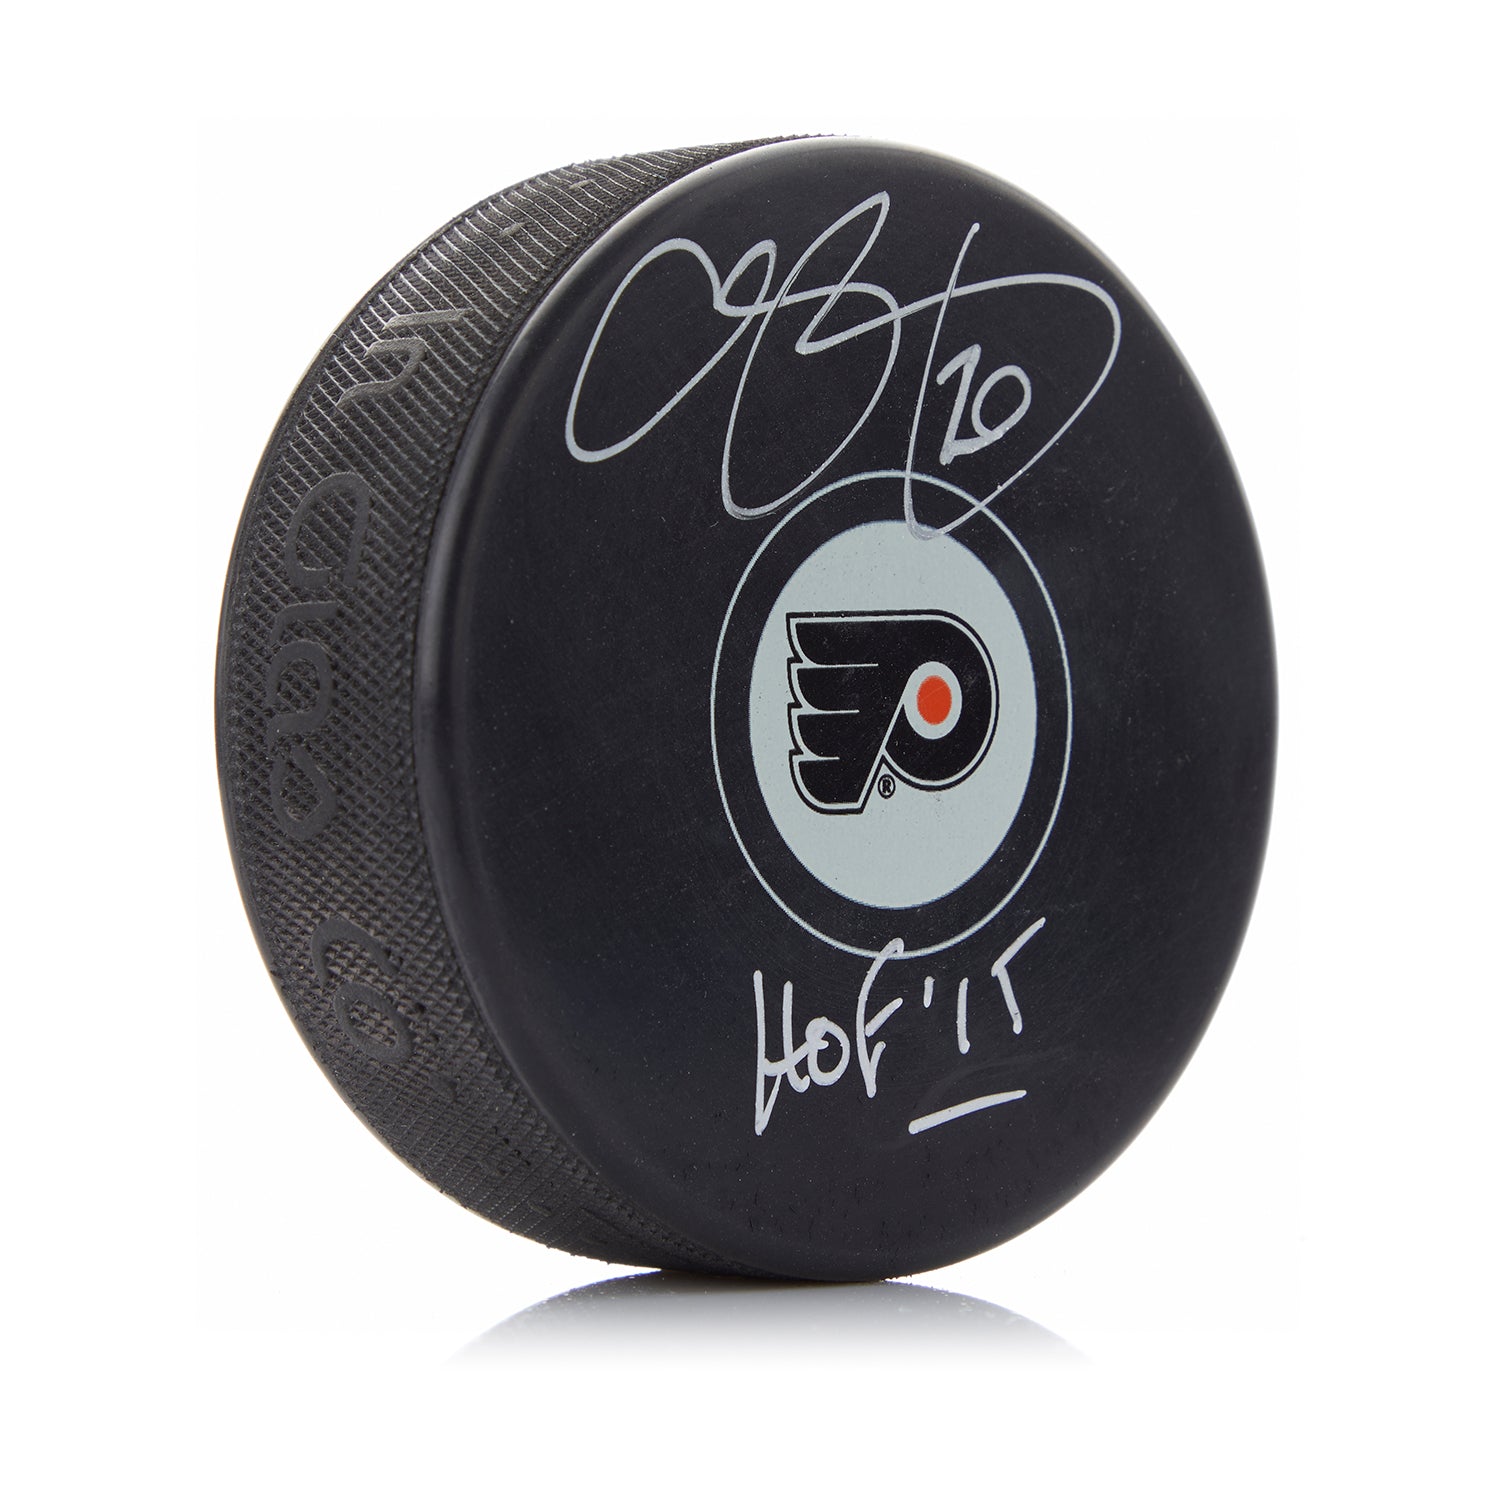 Chris Pronger Autographed Philadelphia Flyers Puck with HOF Note